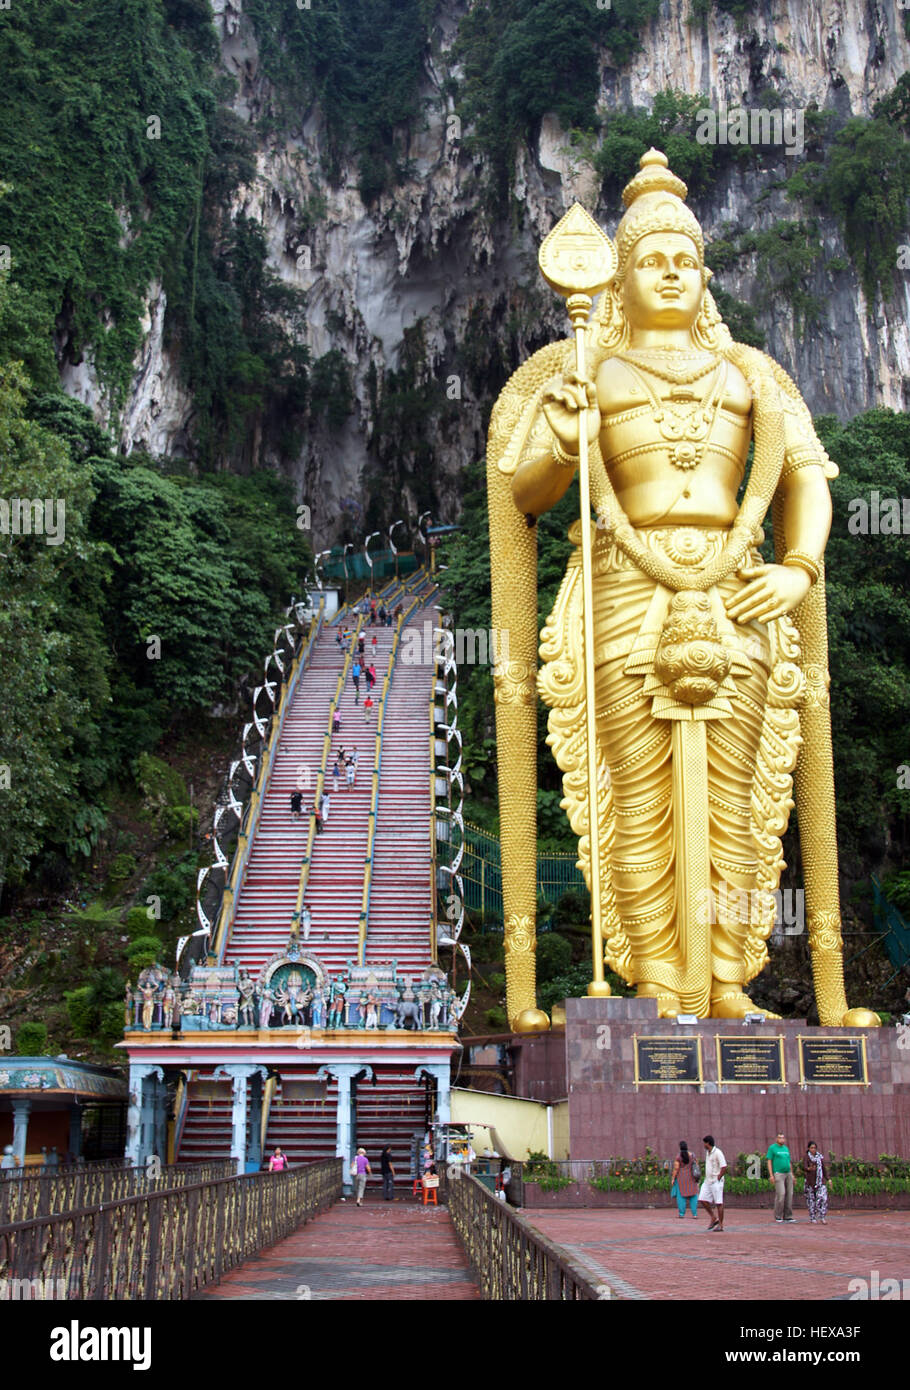 Asia,Batu Caves,Hindu,Kuala,Lumpur,Malaysia,Statures,Tour,caves,gold,monkeys,steps,temple Stock Photo